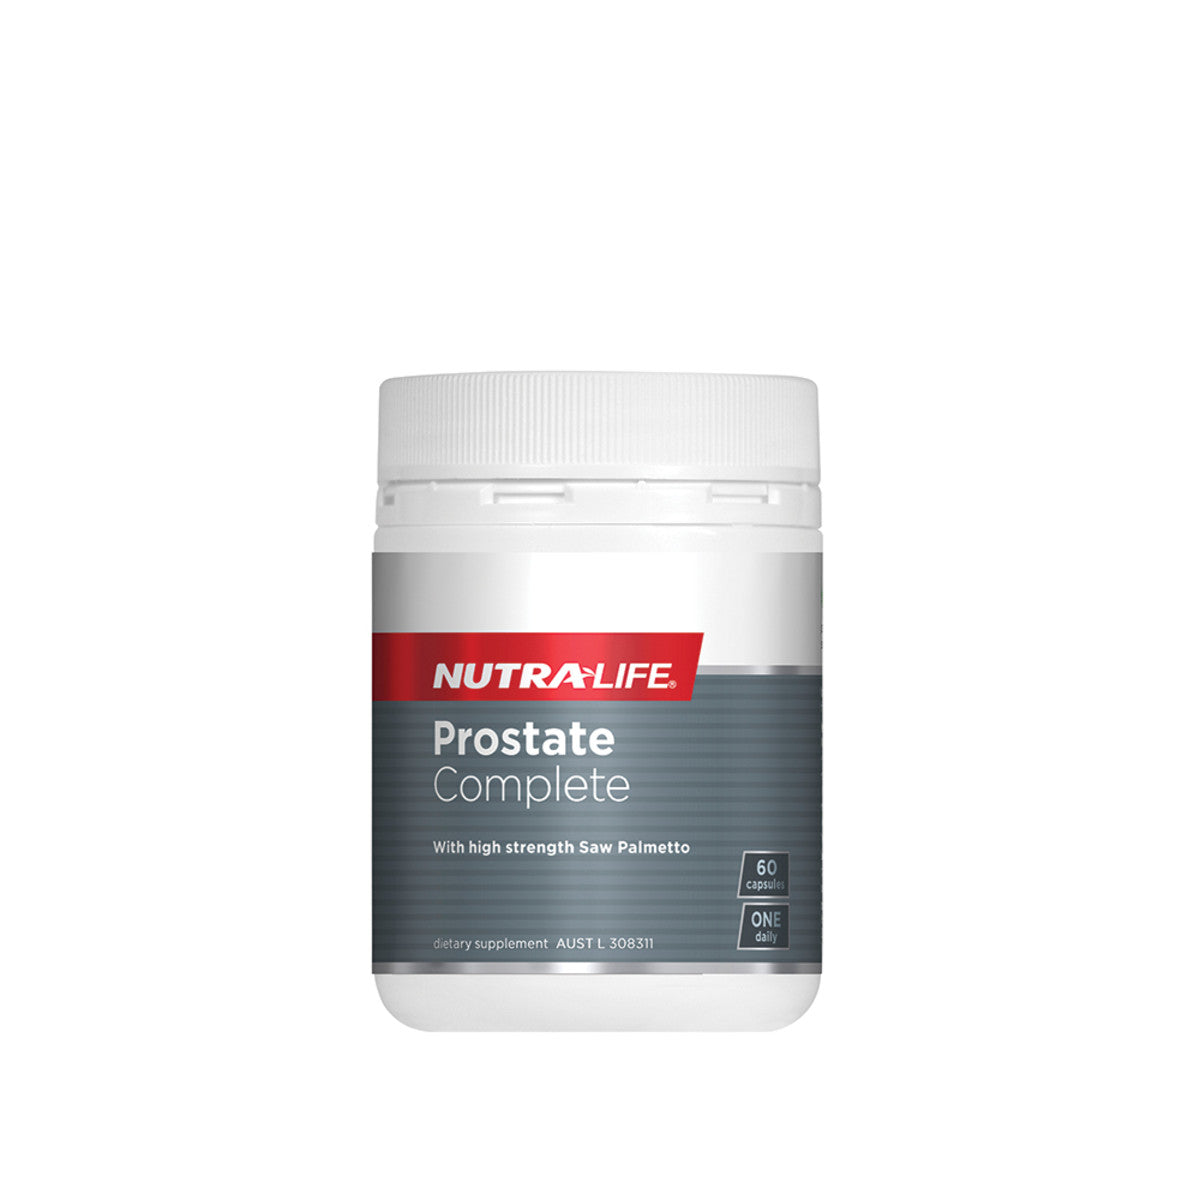 NutraLife - Prostate Complete